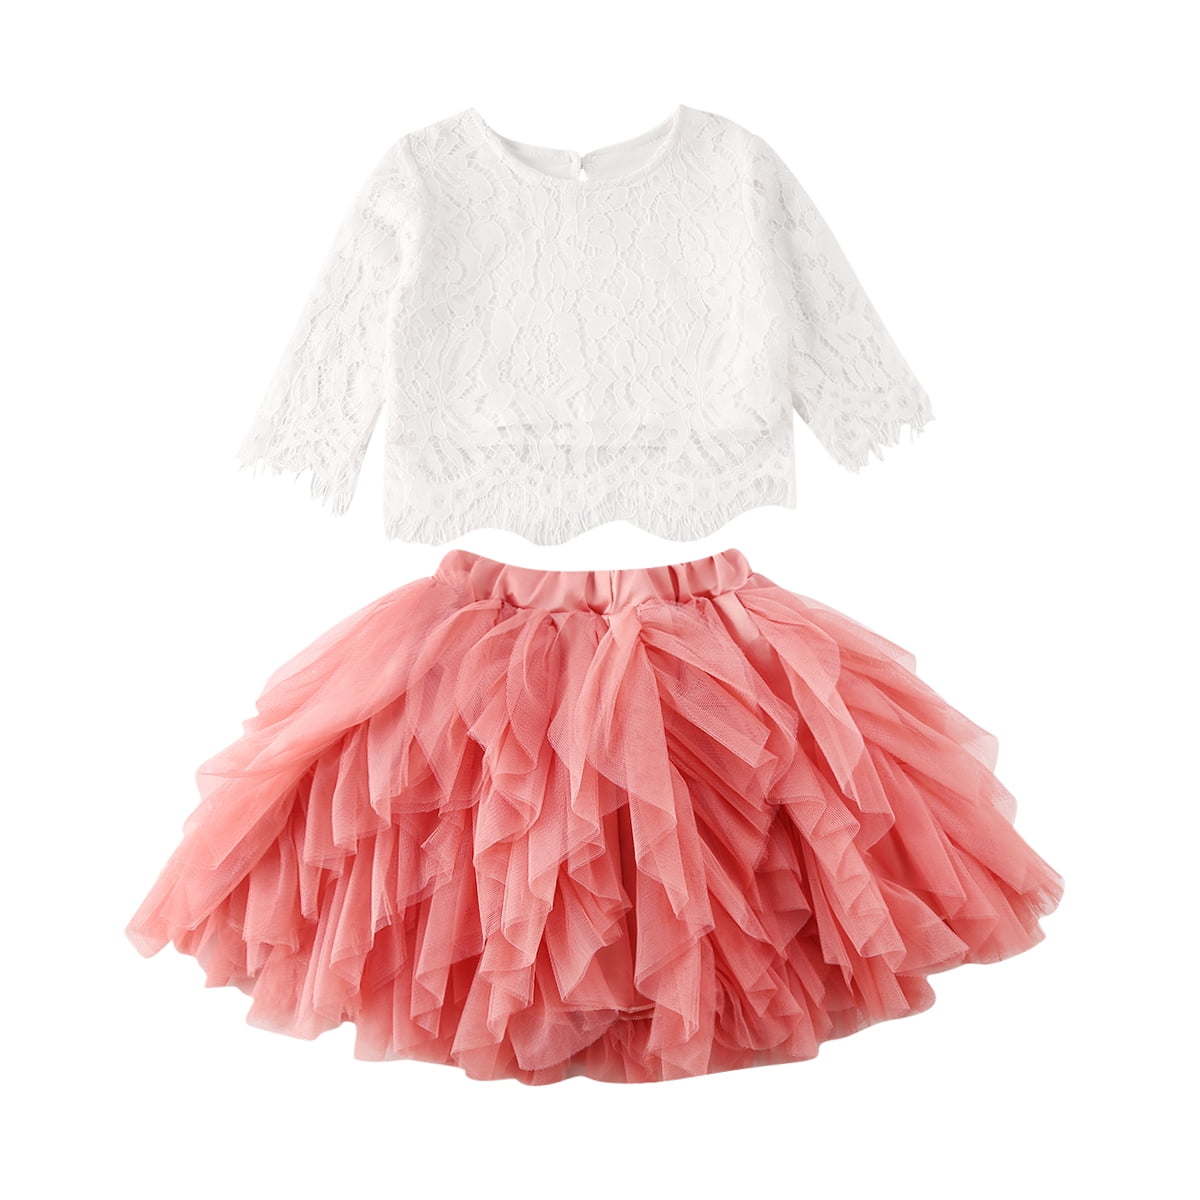 Kids Baby Girls Dress Lace Floral Top Tank T shirt Tutu Skirt 2PCS Outfits Set 